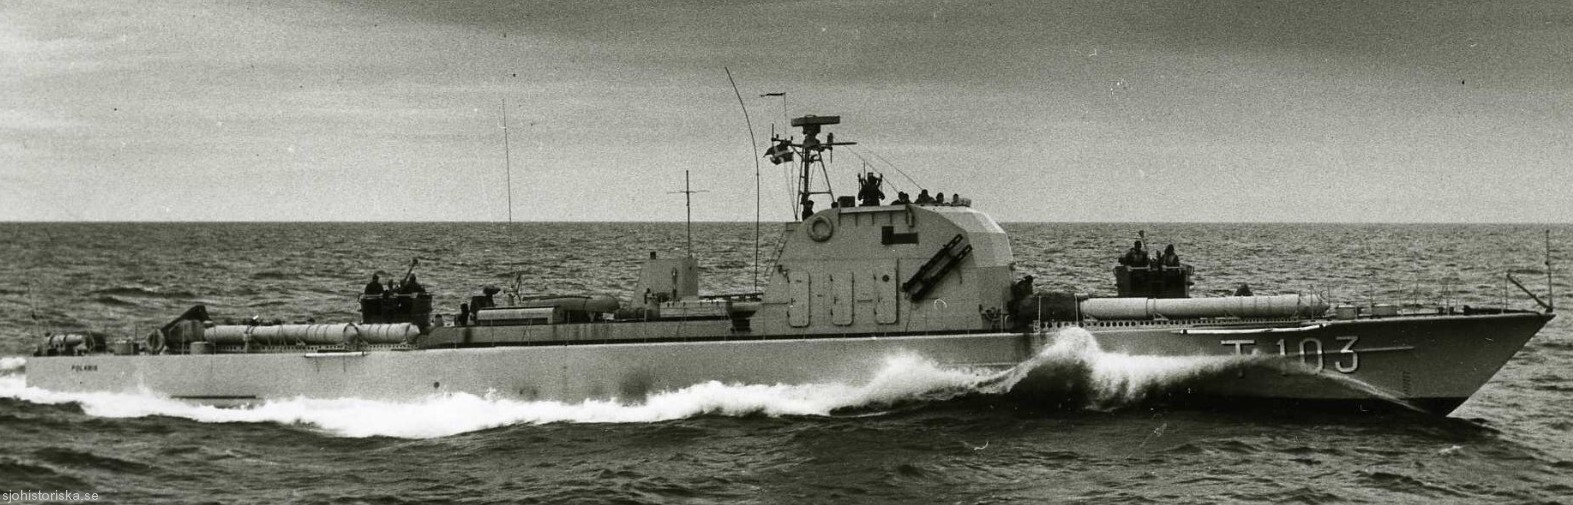 t103 polaris hms hswms plejad class fast attack craft torpedo boat vessel swedish navy svenska marinen 08